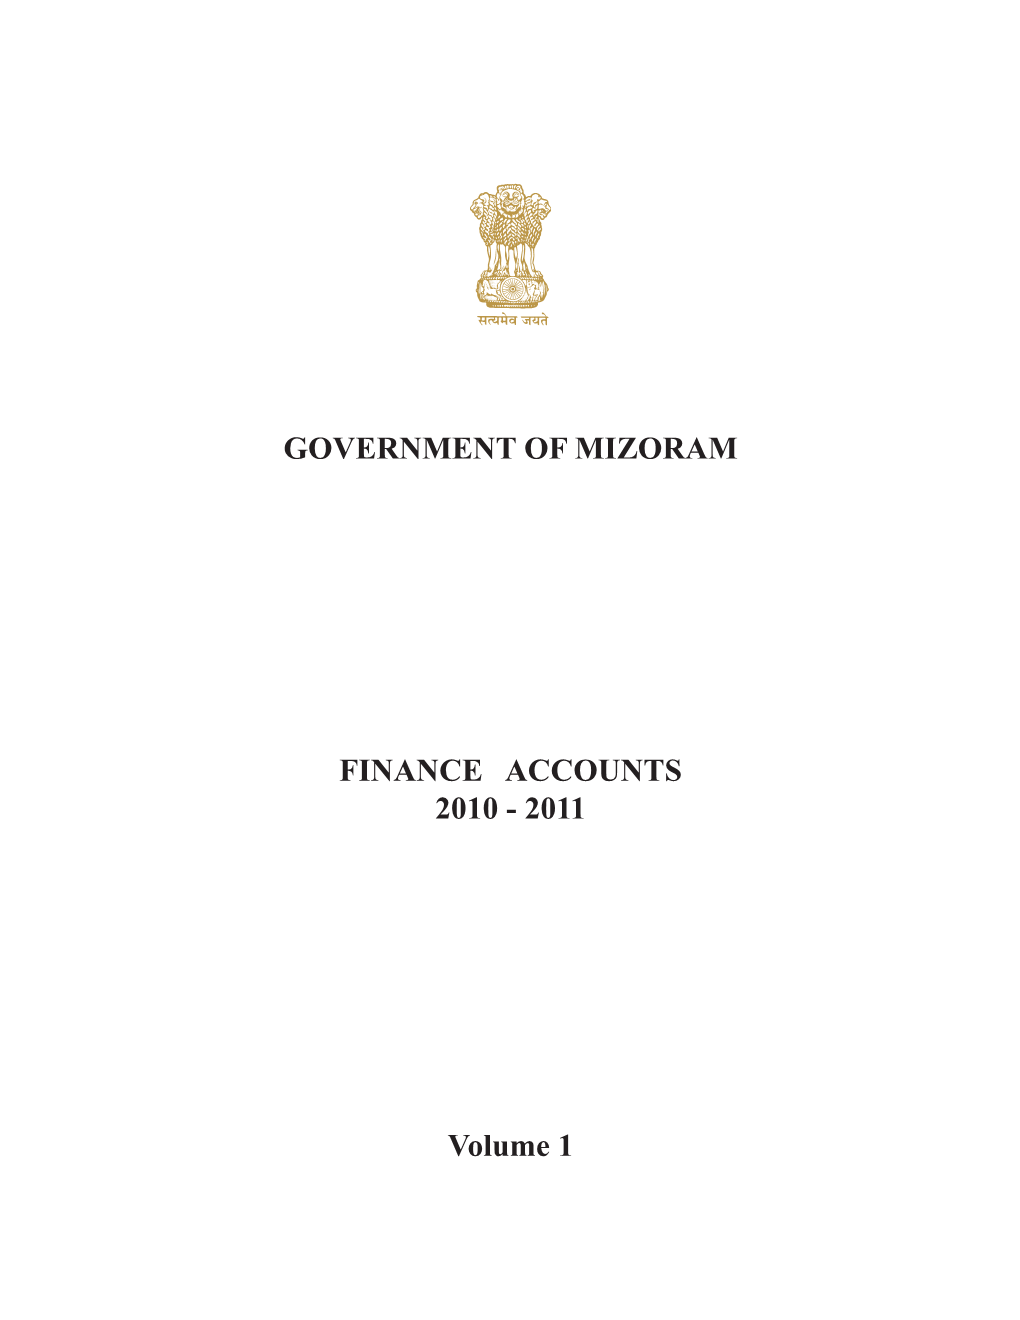 Government of Mizoram Finance Accounts 2010